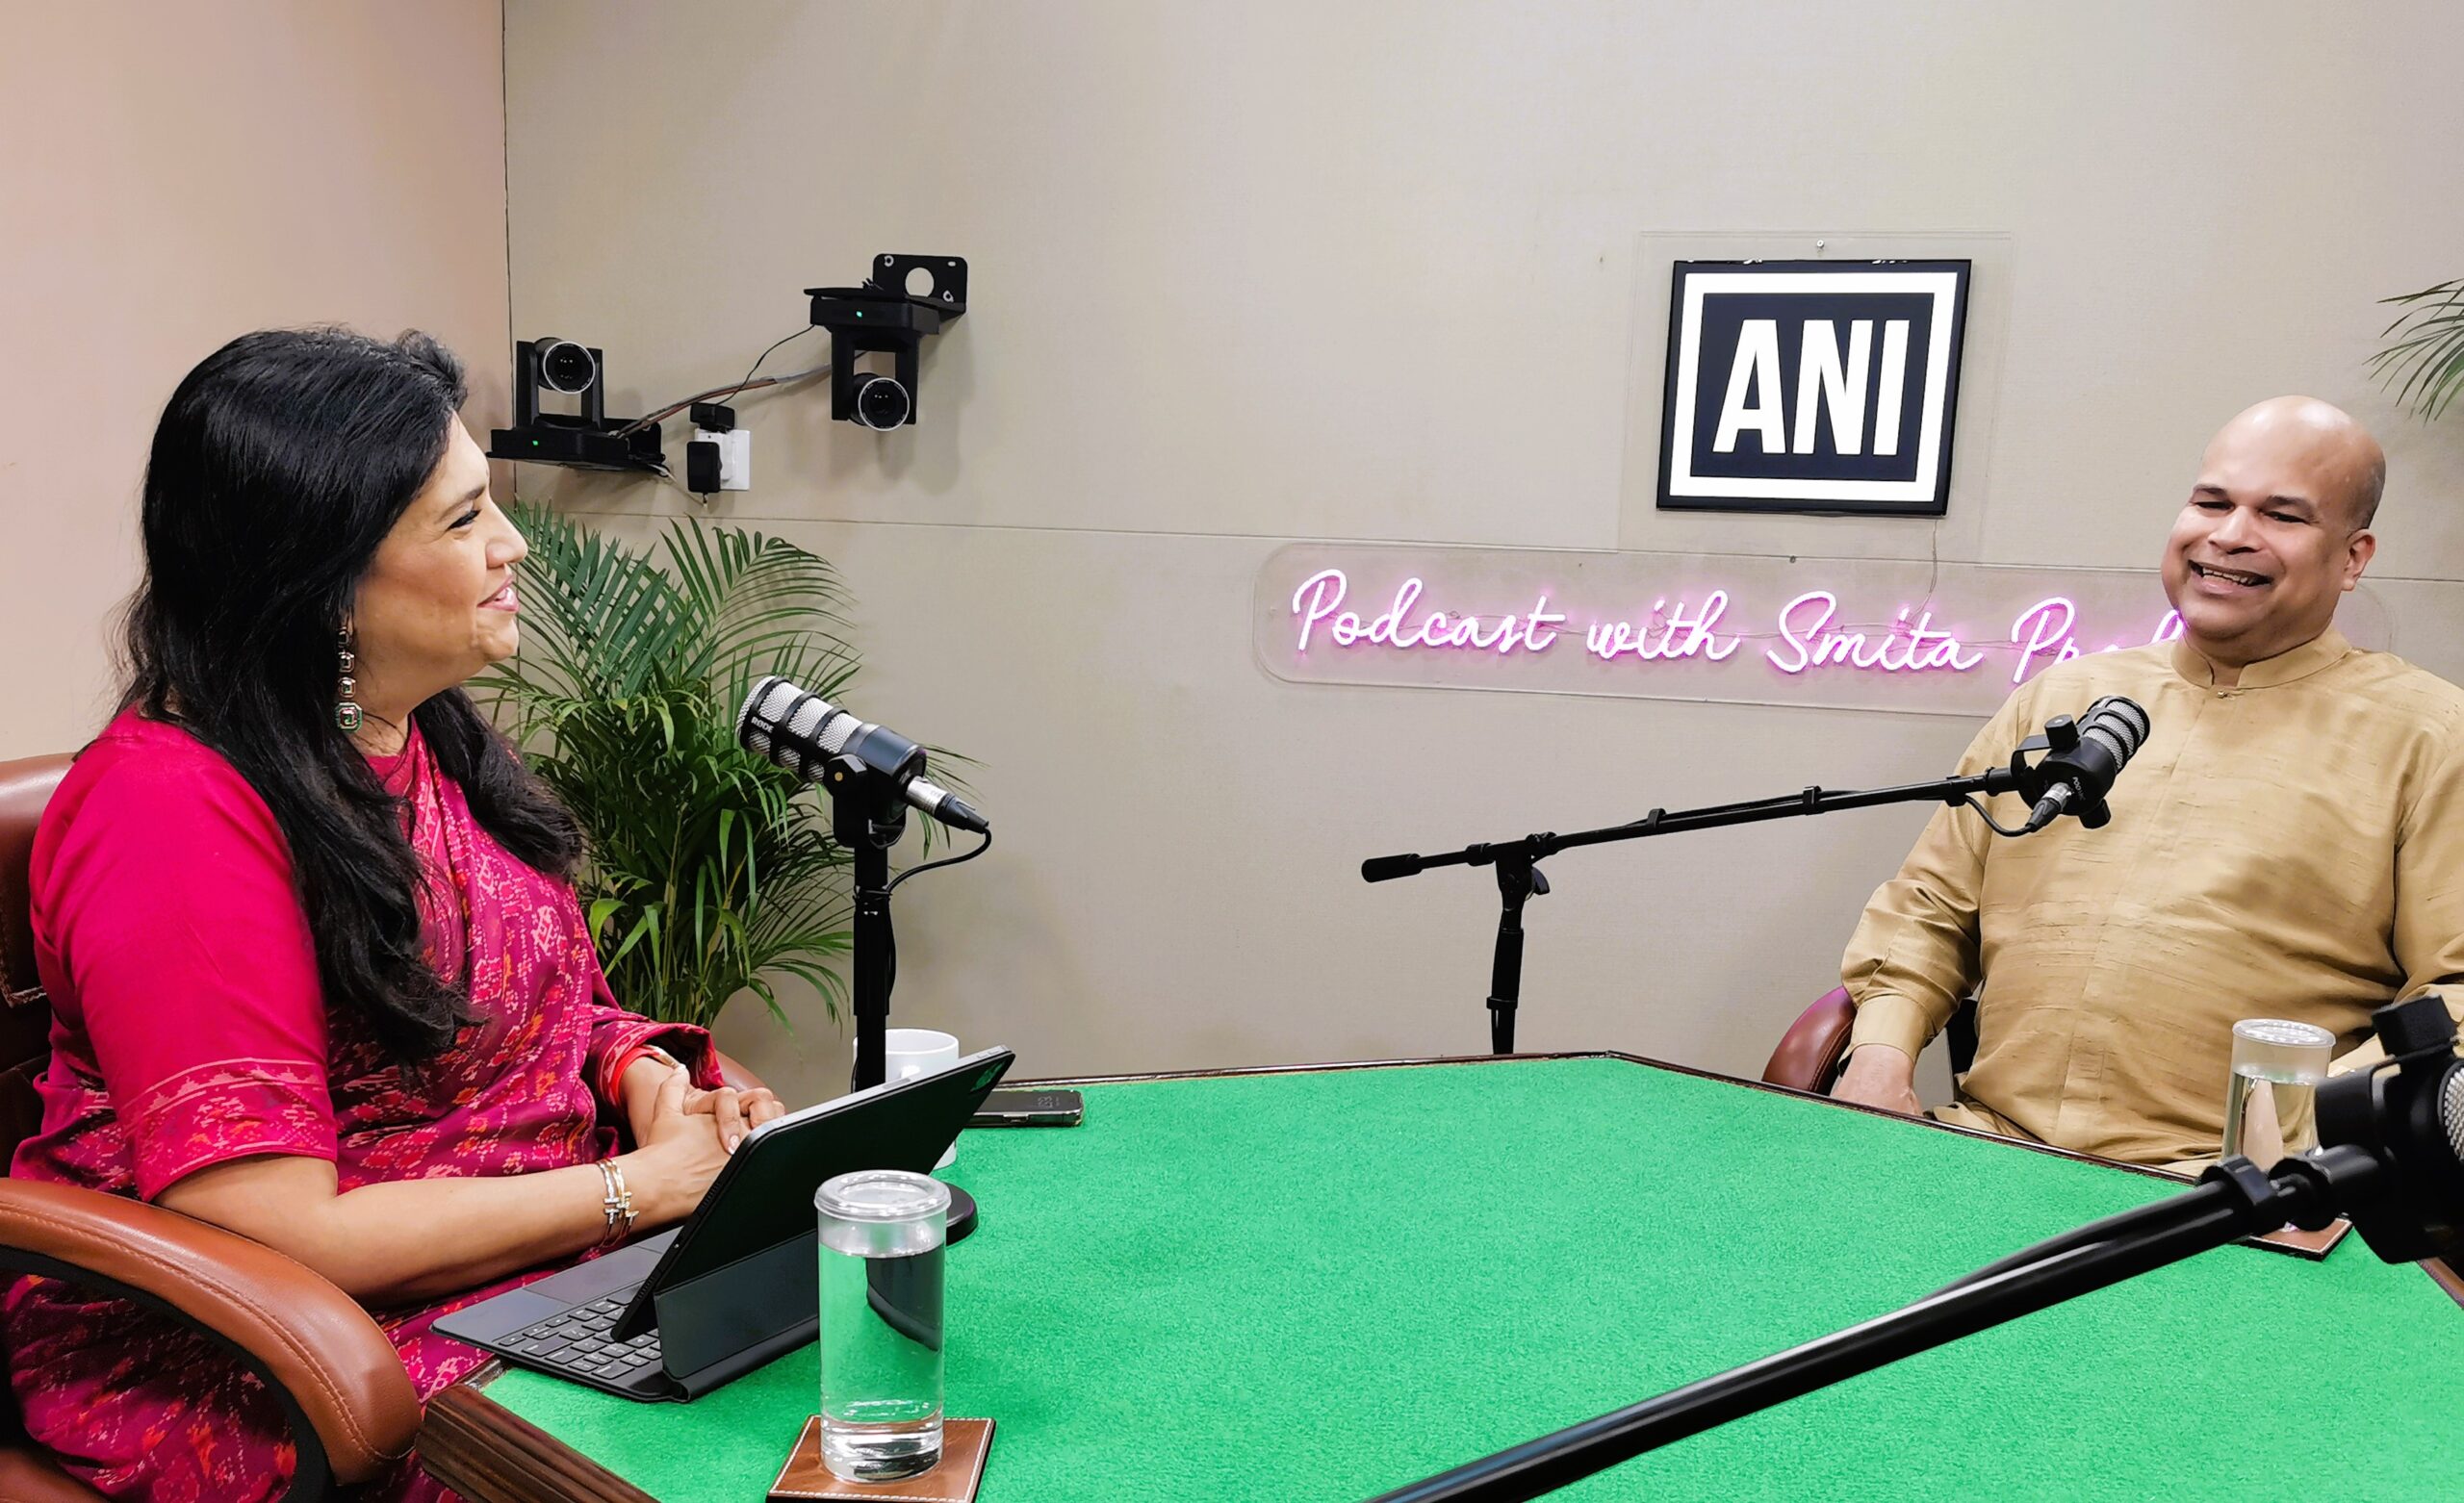 High Commissioner Moragoda interviewed in premier talk show ‘Podcast with Smita Prakash’